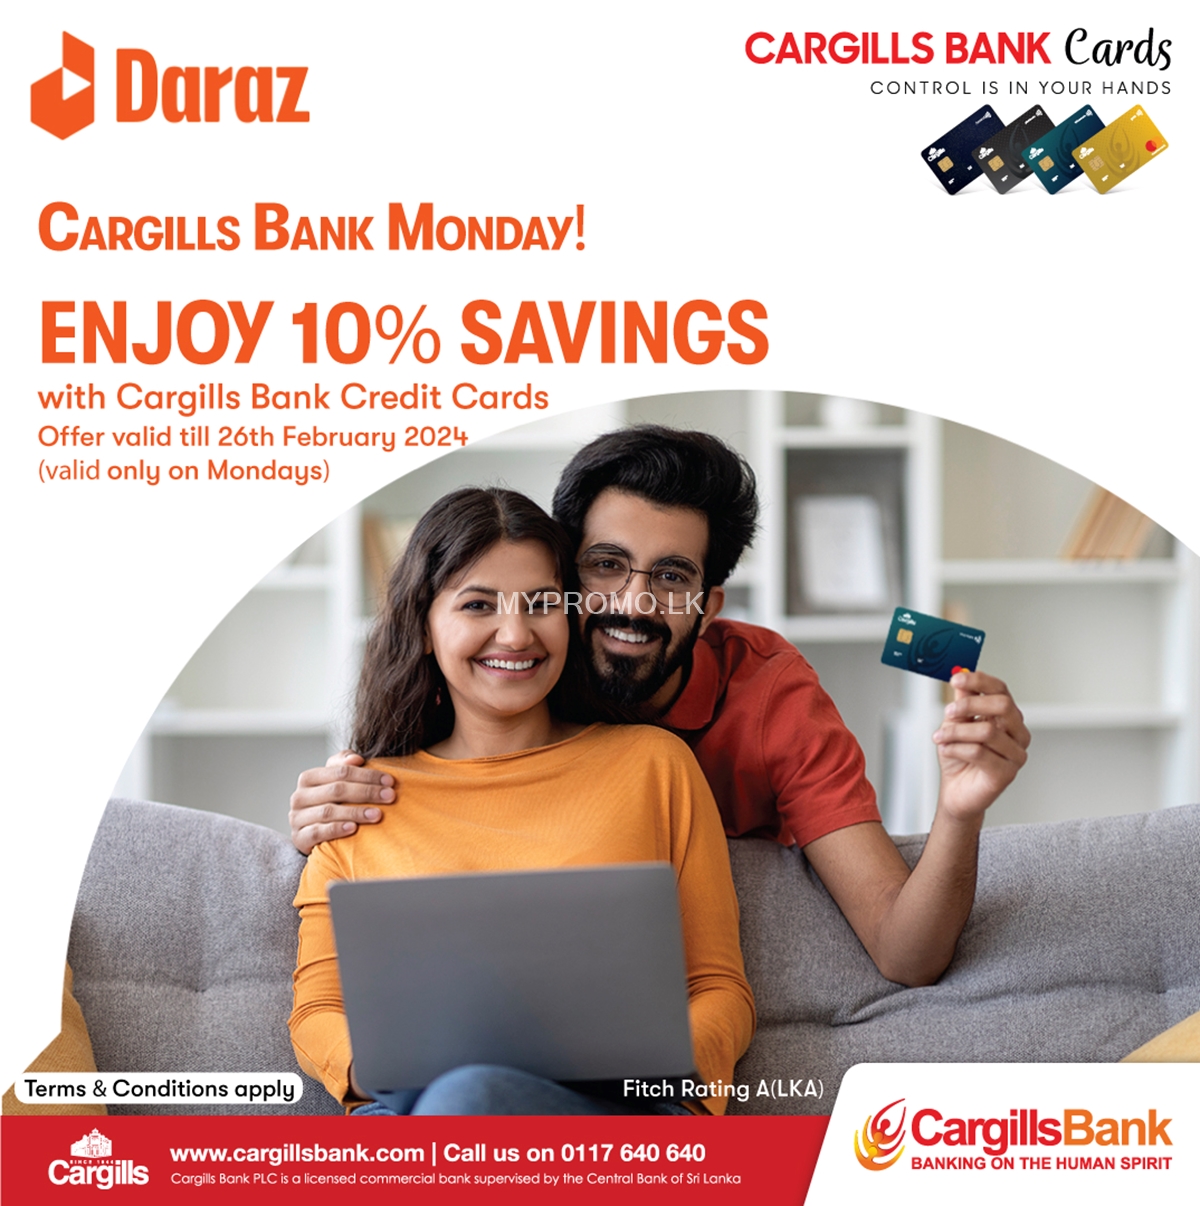 10% savings with Cargills Bank Credit Cards at Daraz